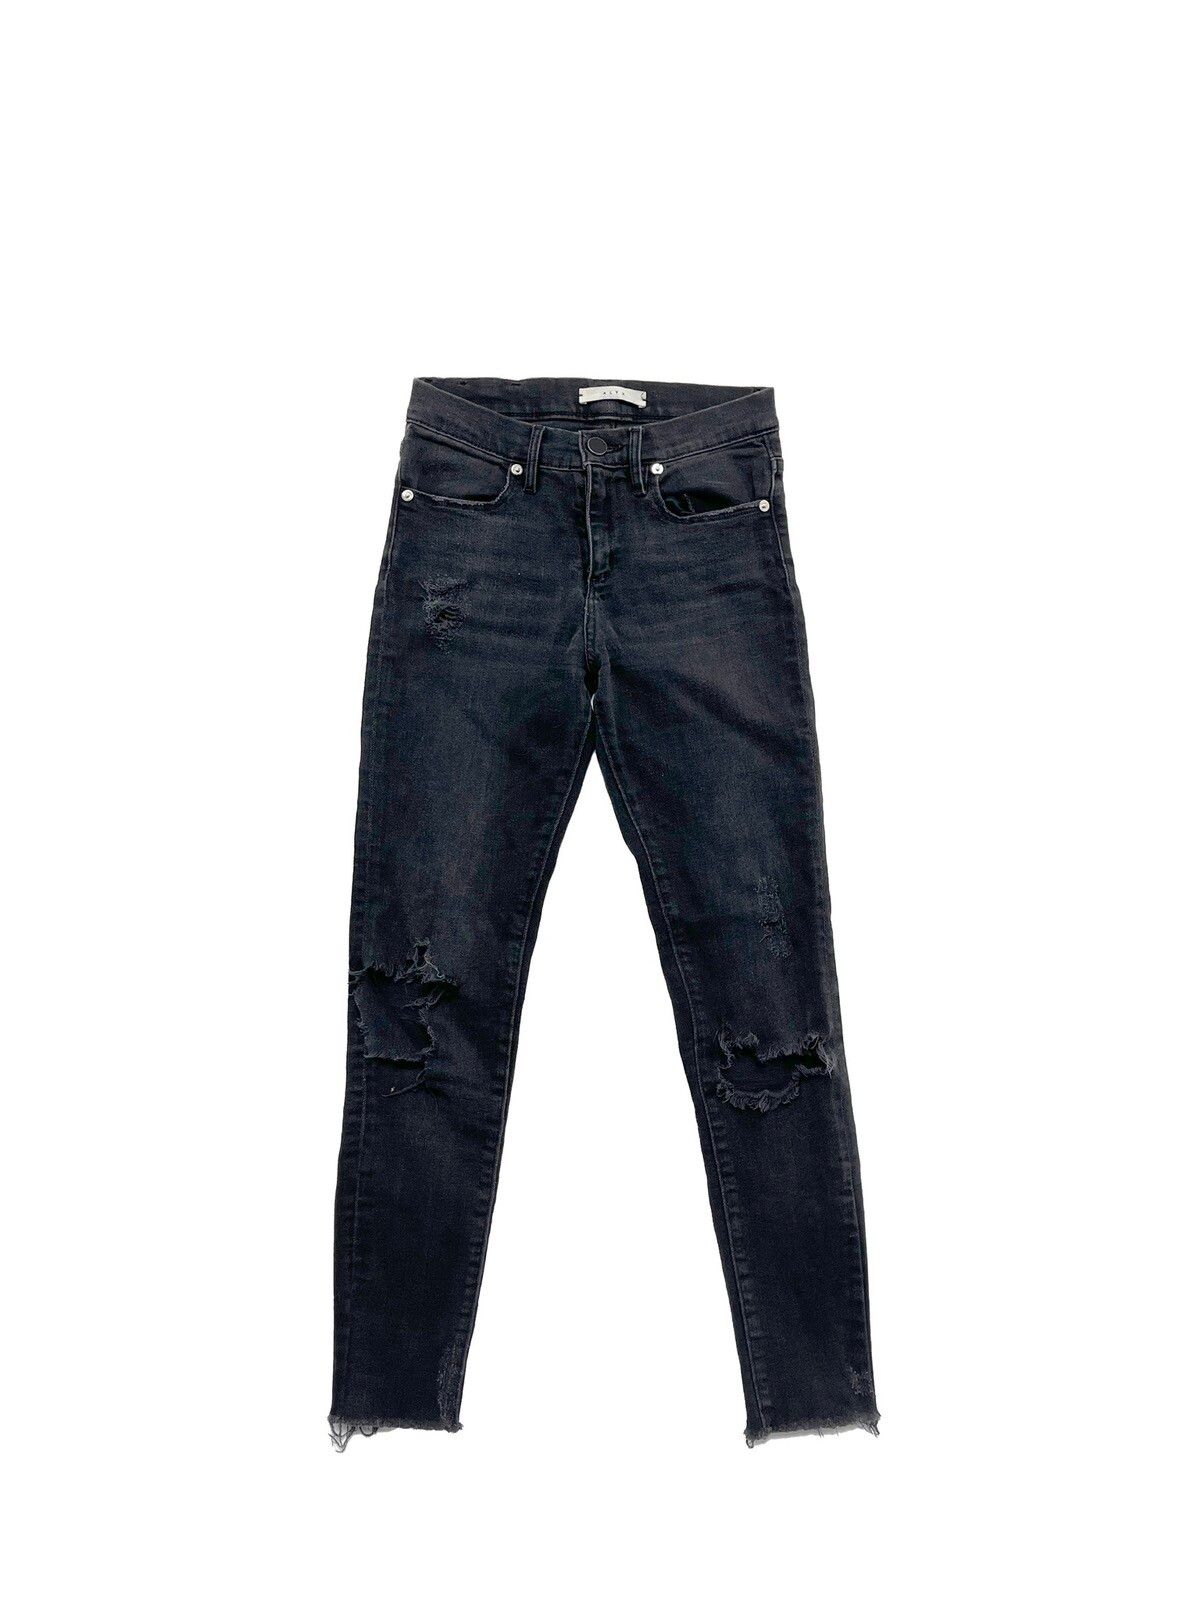 1017 ALYX 9SM Alyx distressed black jeans | Grailed